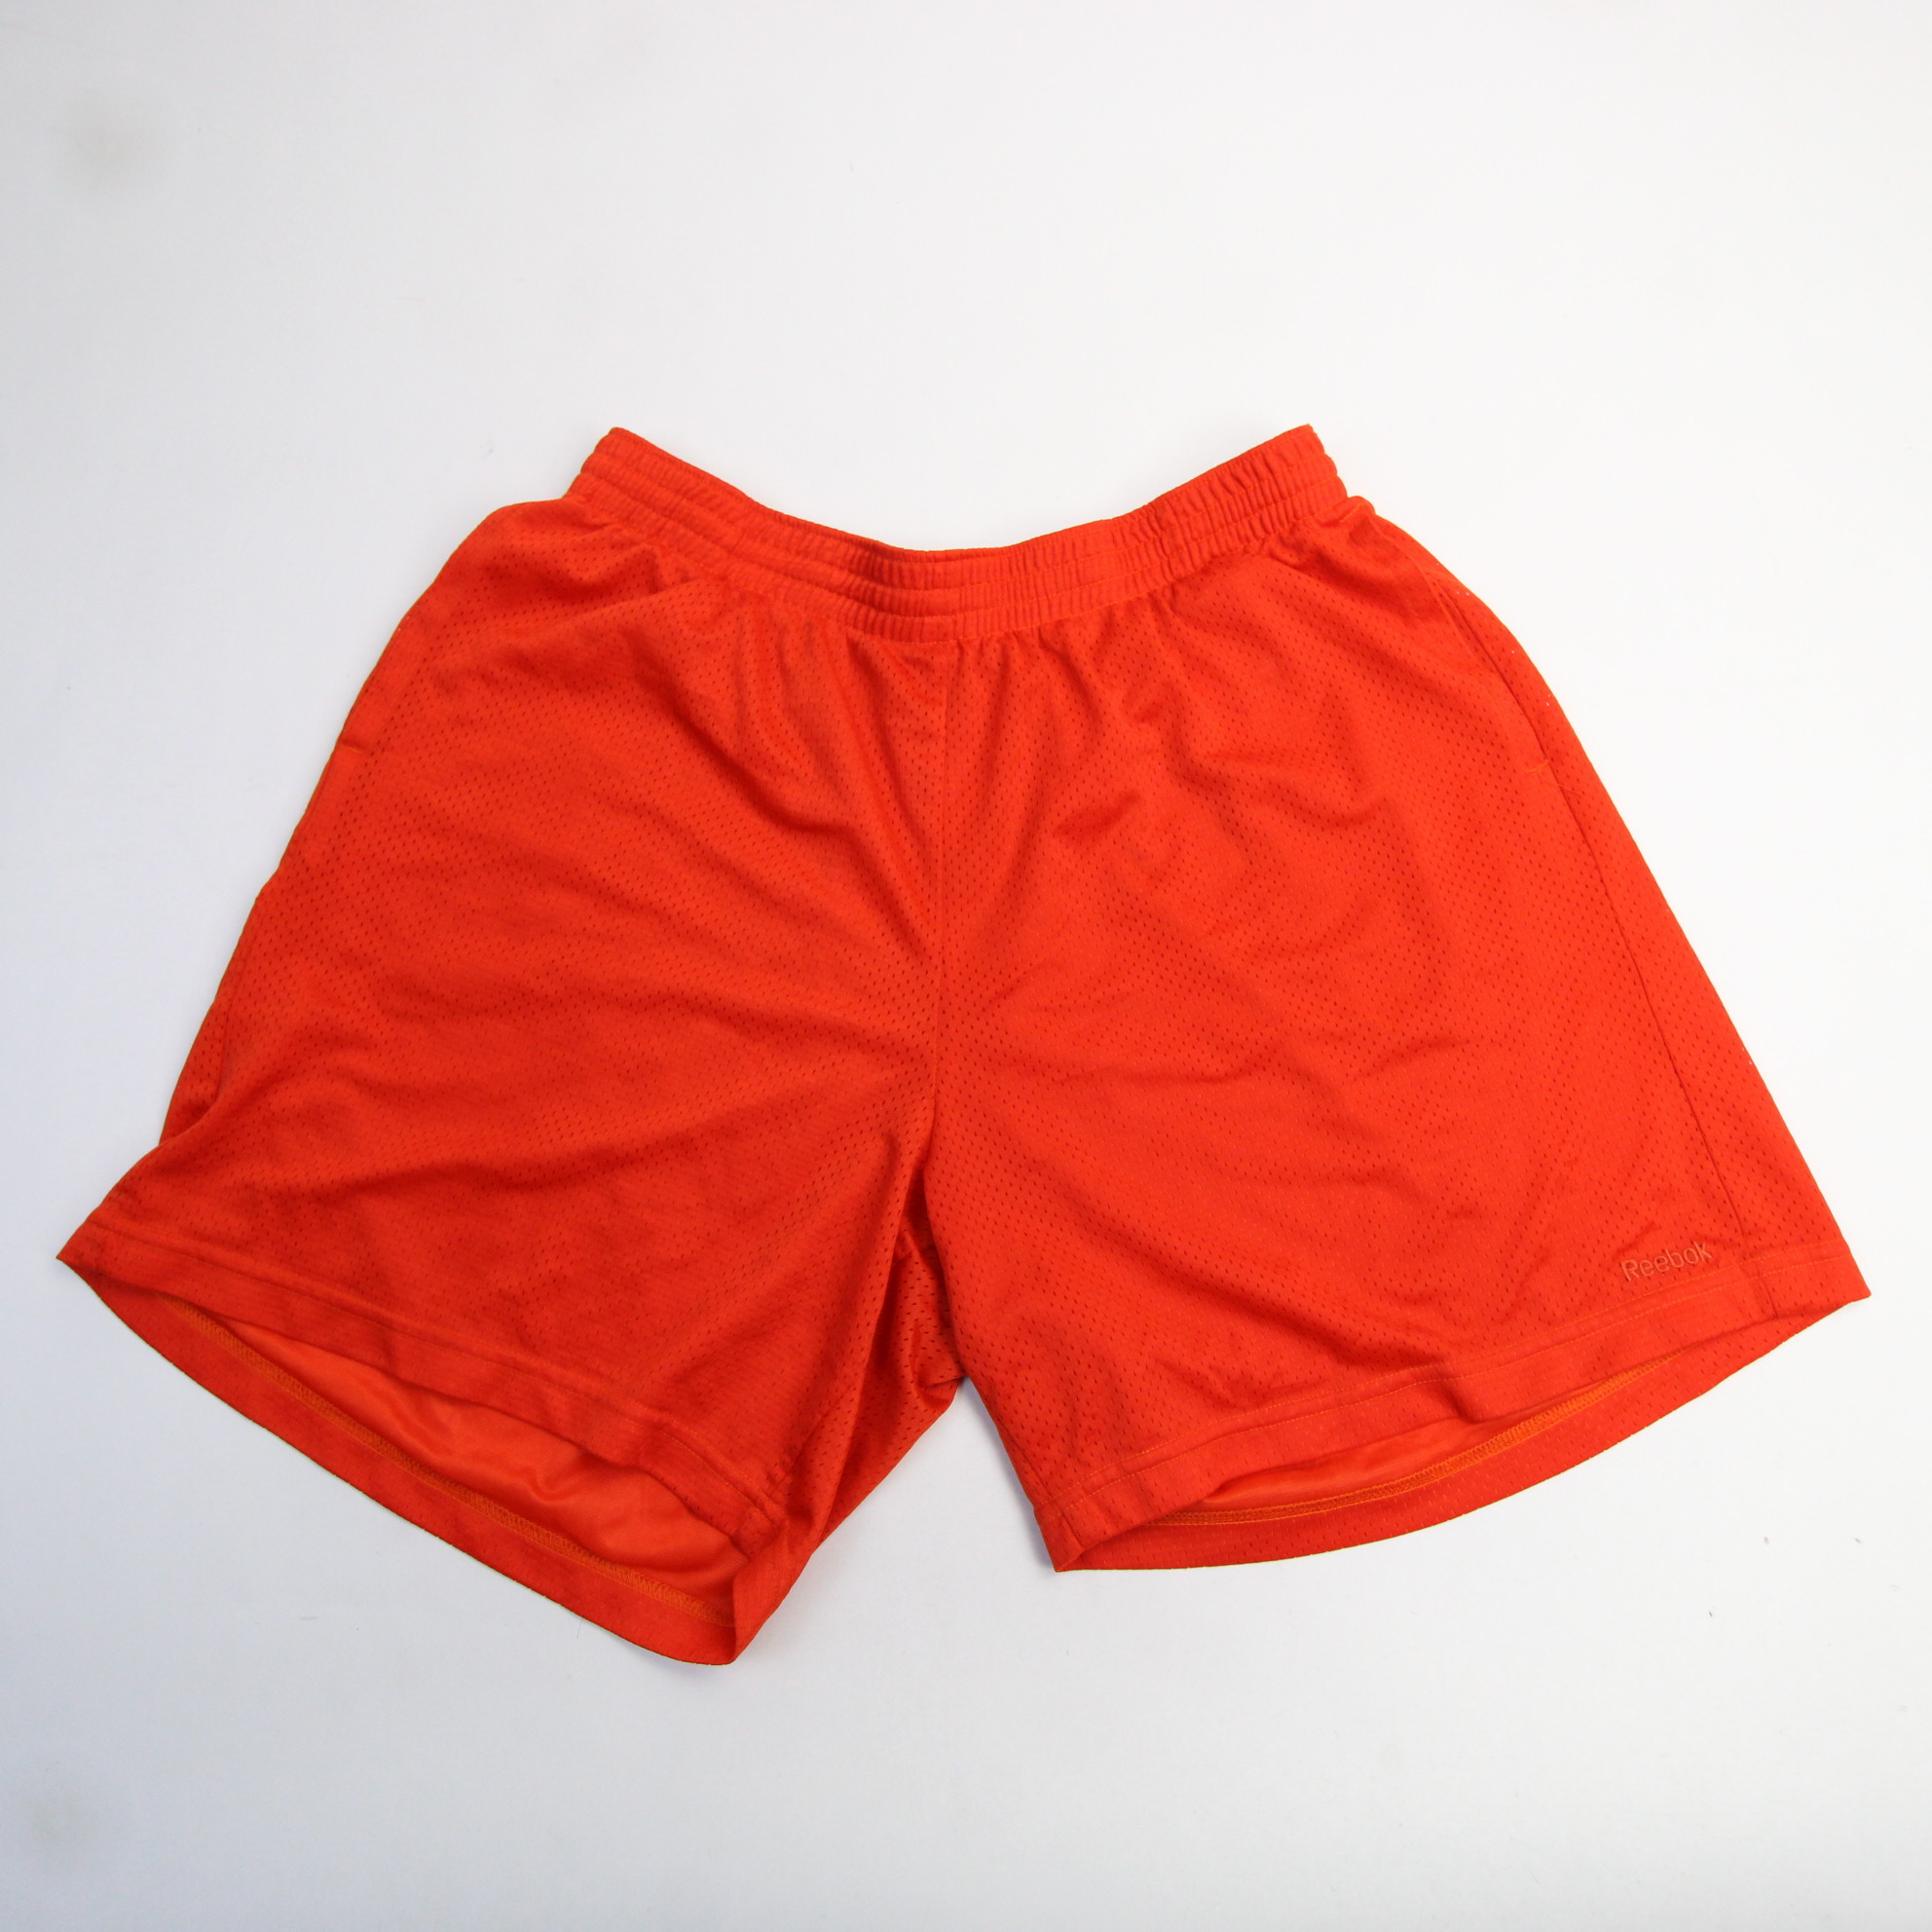 sund fornuft Sindssyge huh Reebok Athletic Shorts Men&#039;s Orange Used | eBay